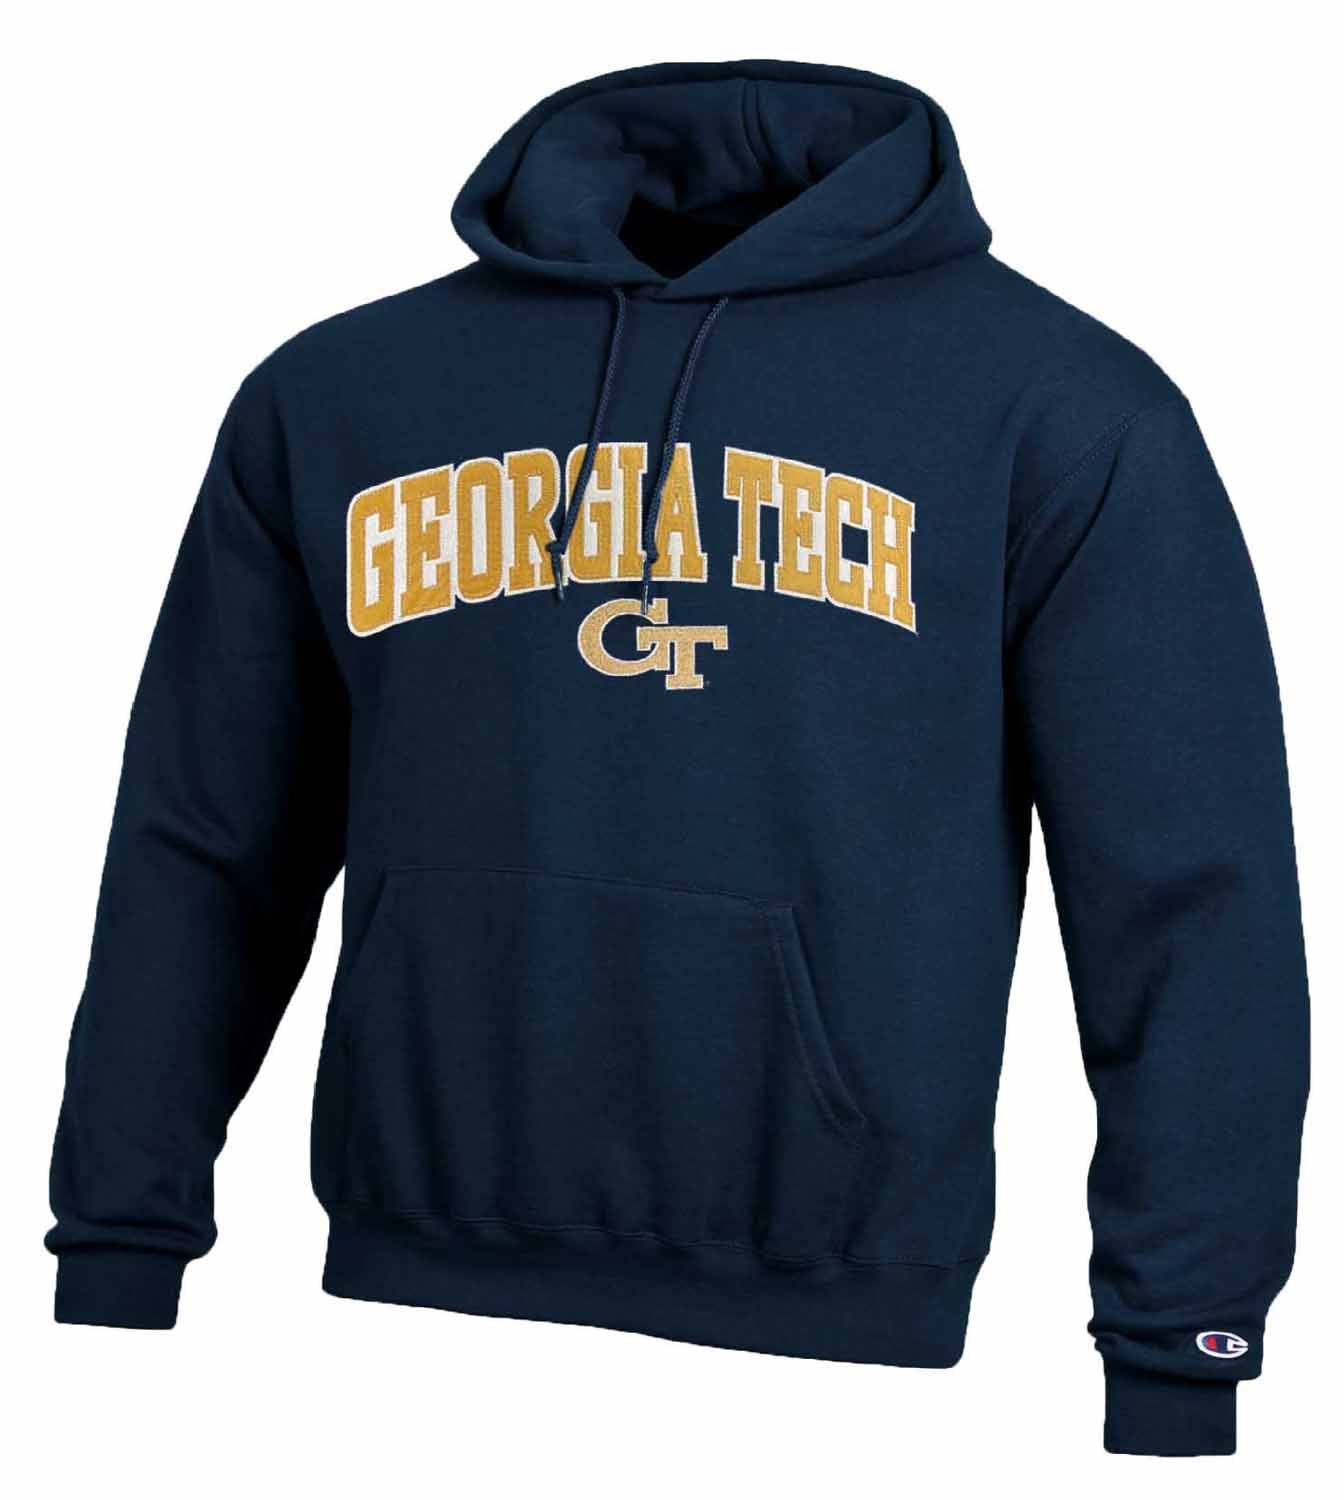 Georgia Tech Yellowjackets Champion Adult Tackle Twill Hooded Sweatshirt - Navy